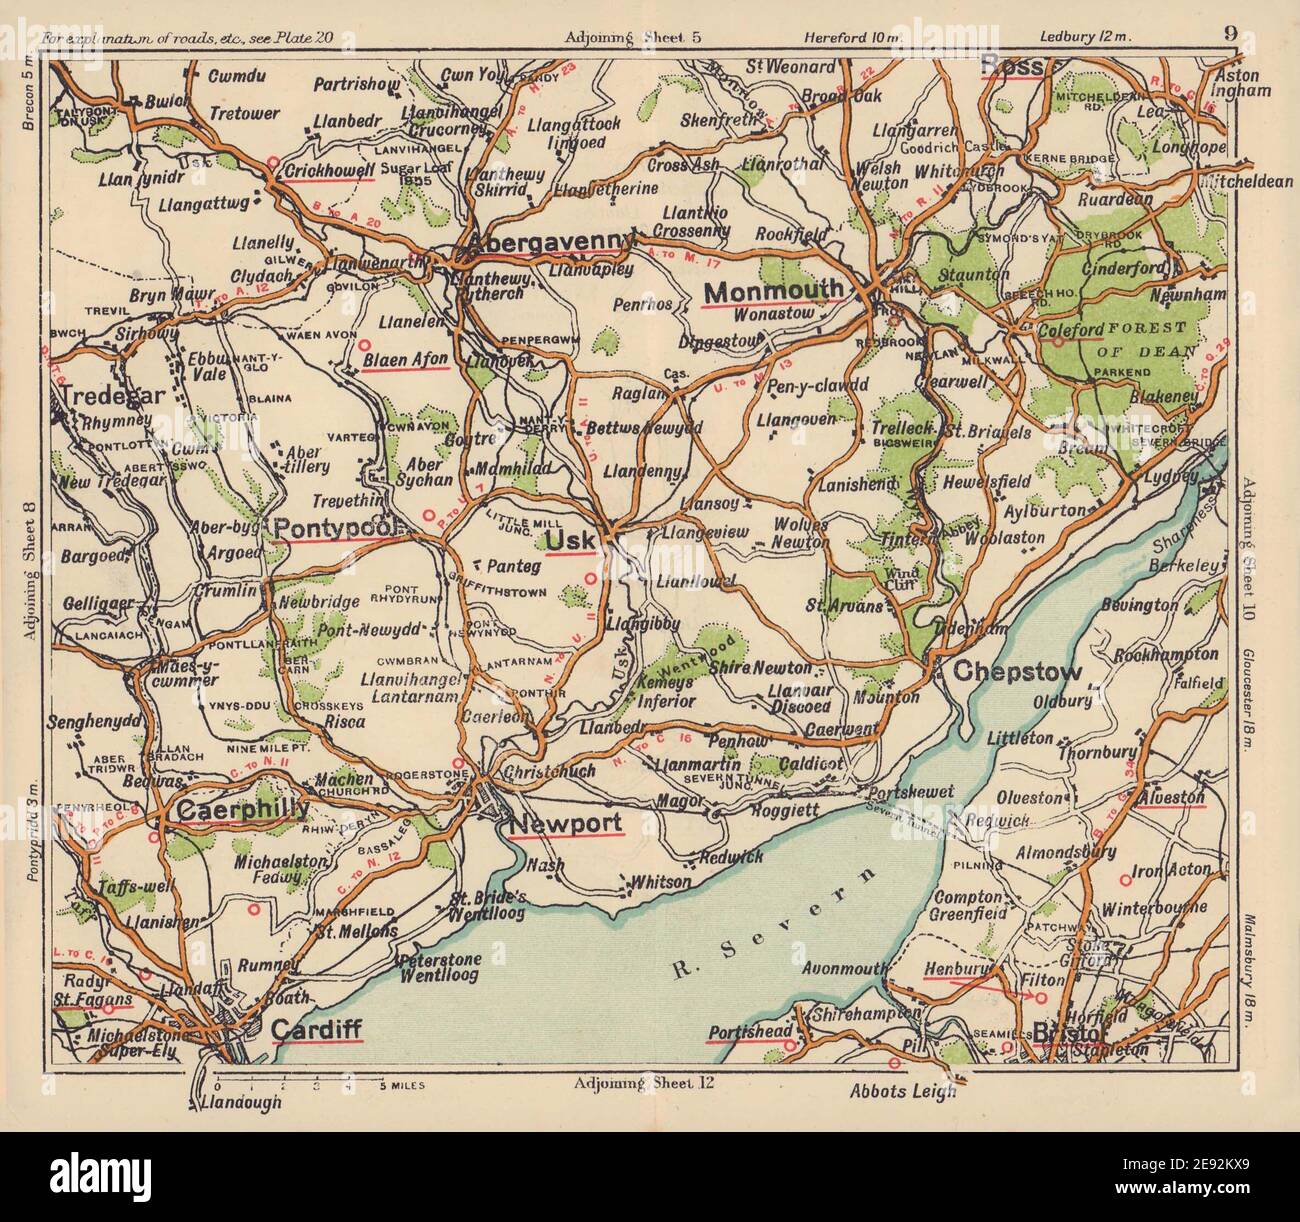 Monmouthshire road map. Cardiff Caerphilly Newport Abergavenny. BACON c1920 Stock Photo